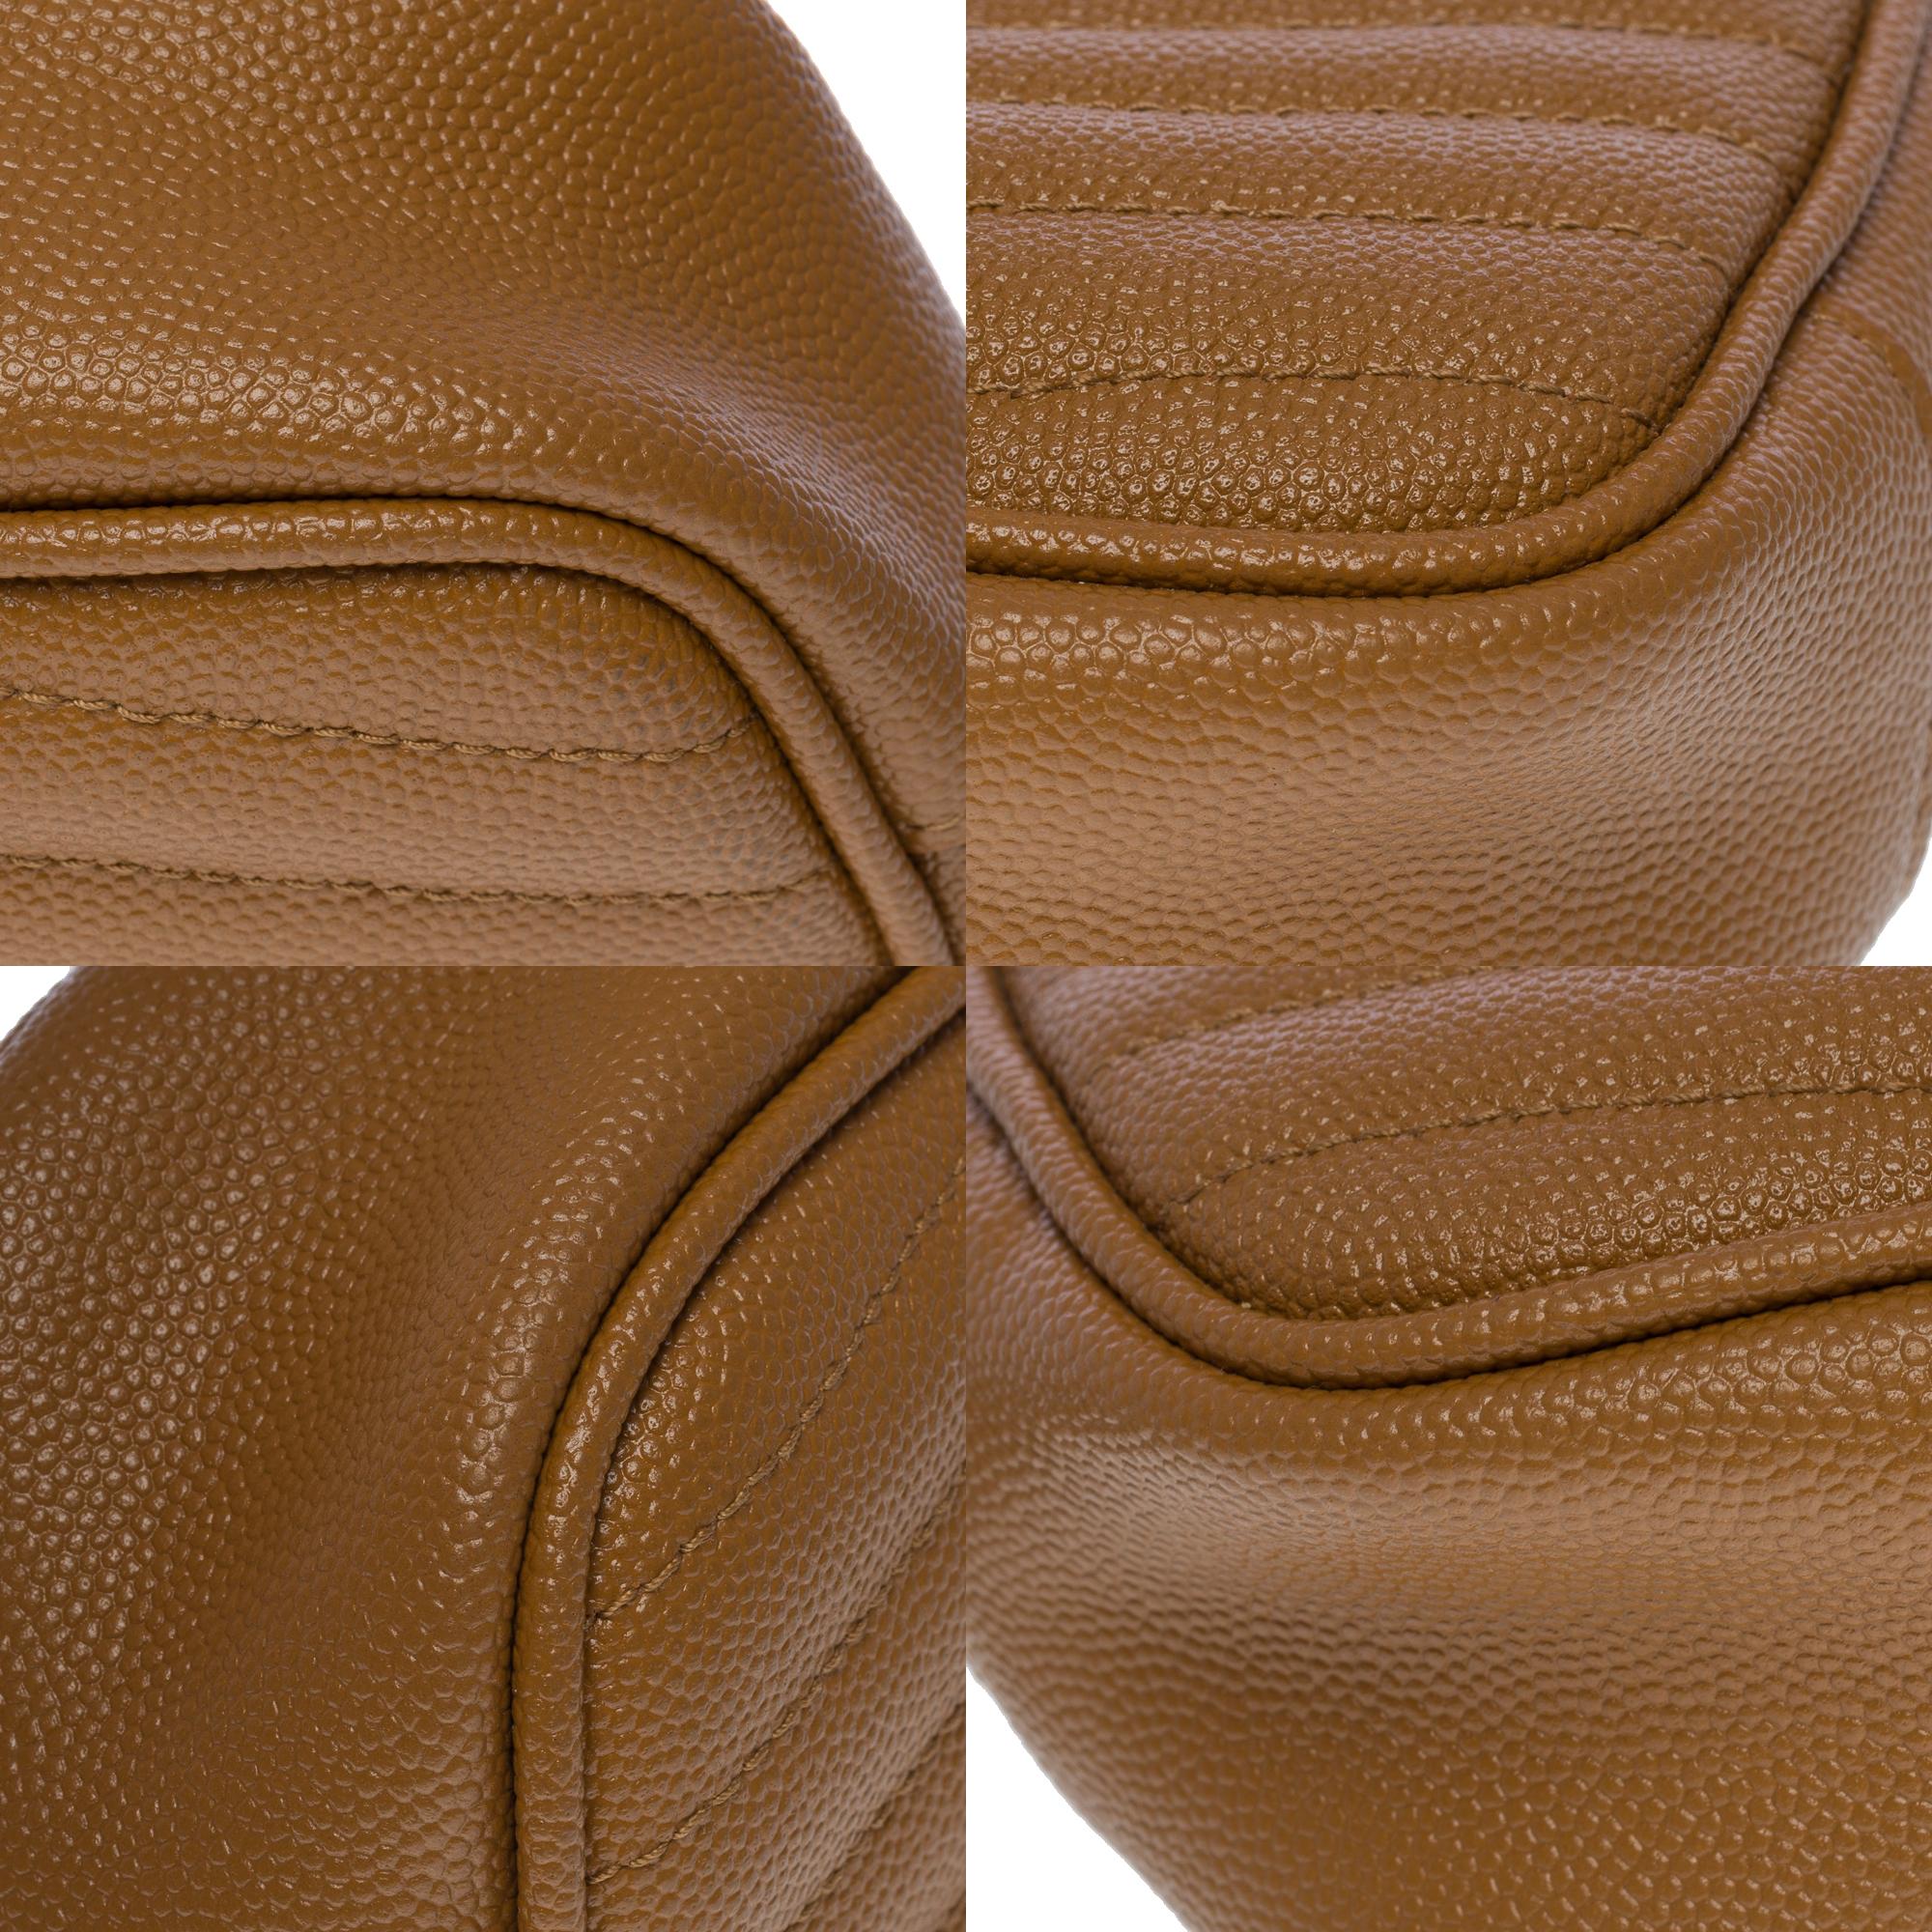 YSL Lou Camera shoulder bag in Camel calfskin leather herringbone, GHW 5